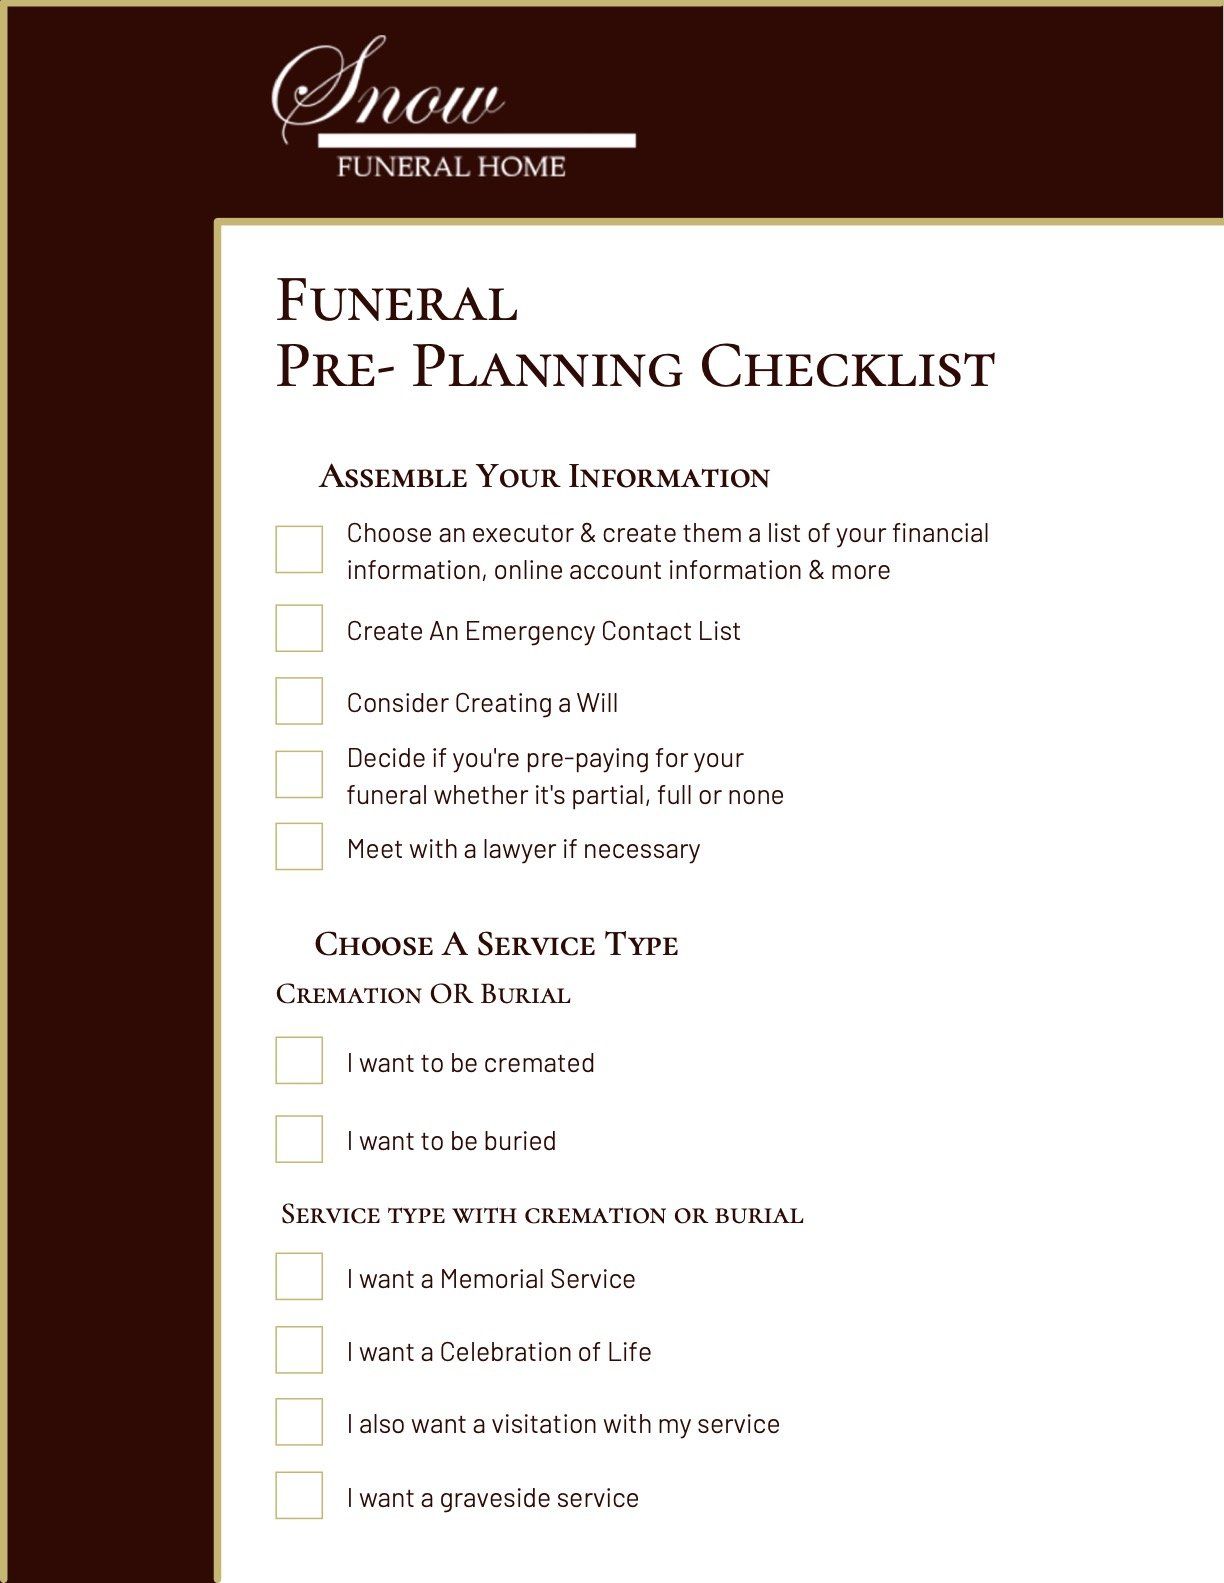 Snow Funeral Pre-Planning Checklist